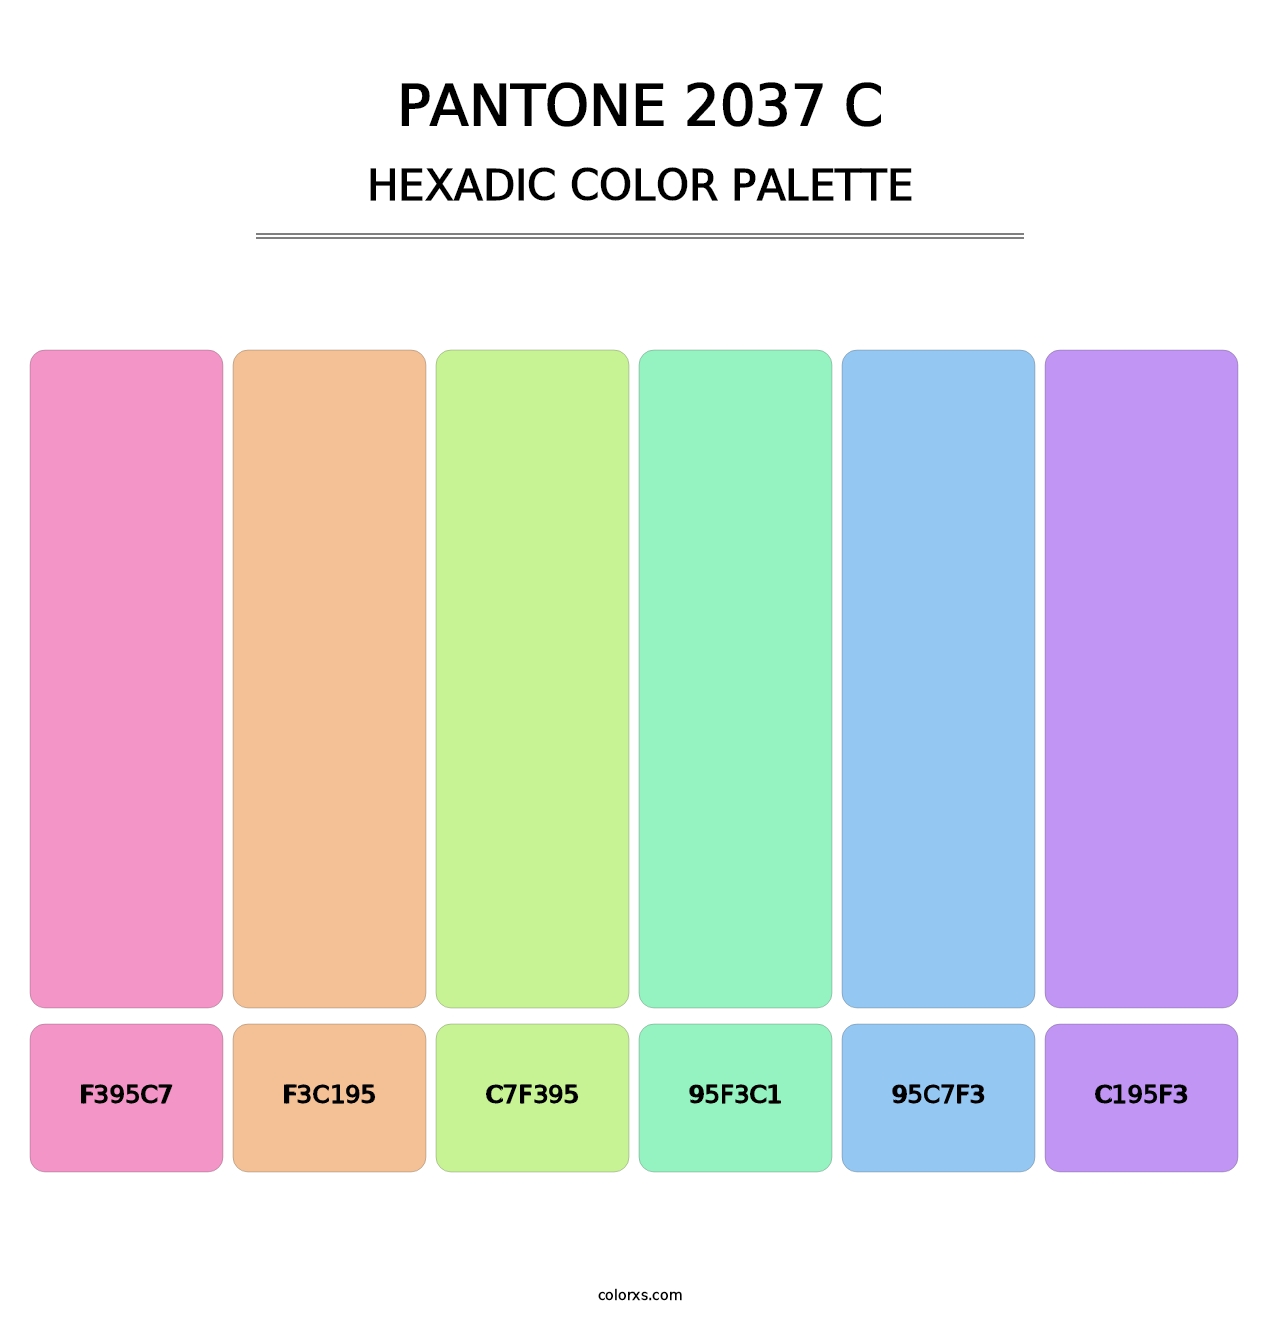 PANTONE 2037 C - Hexadic Color Palette